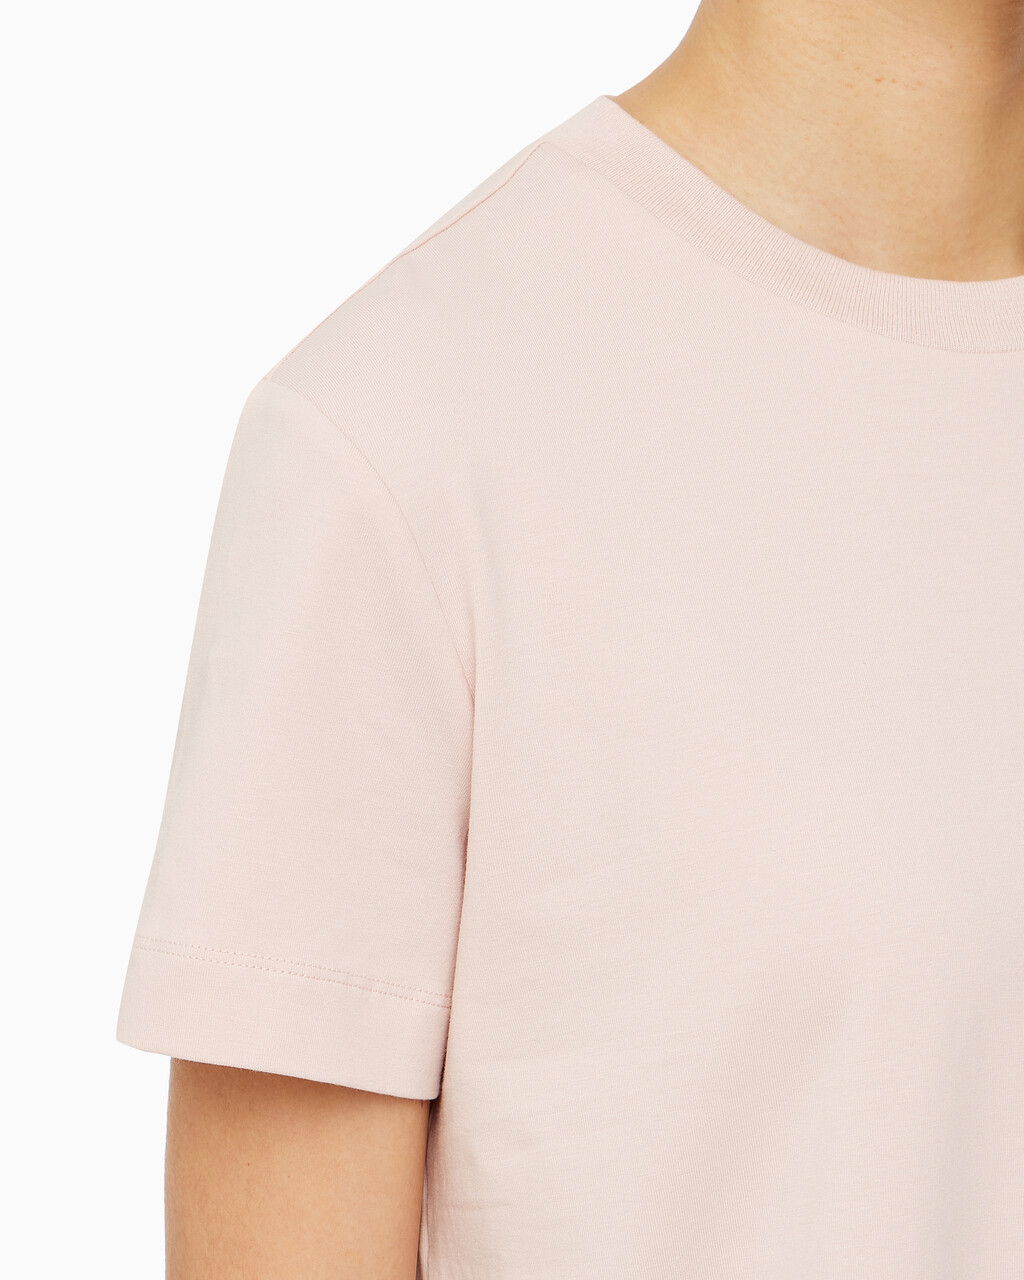 Buy 여성 레귤러핏 스몰 모노그램 로고 반팔 티셔츠  in color PINK